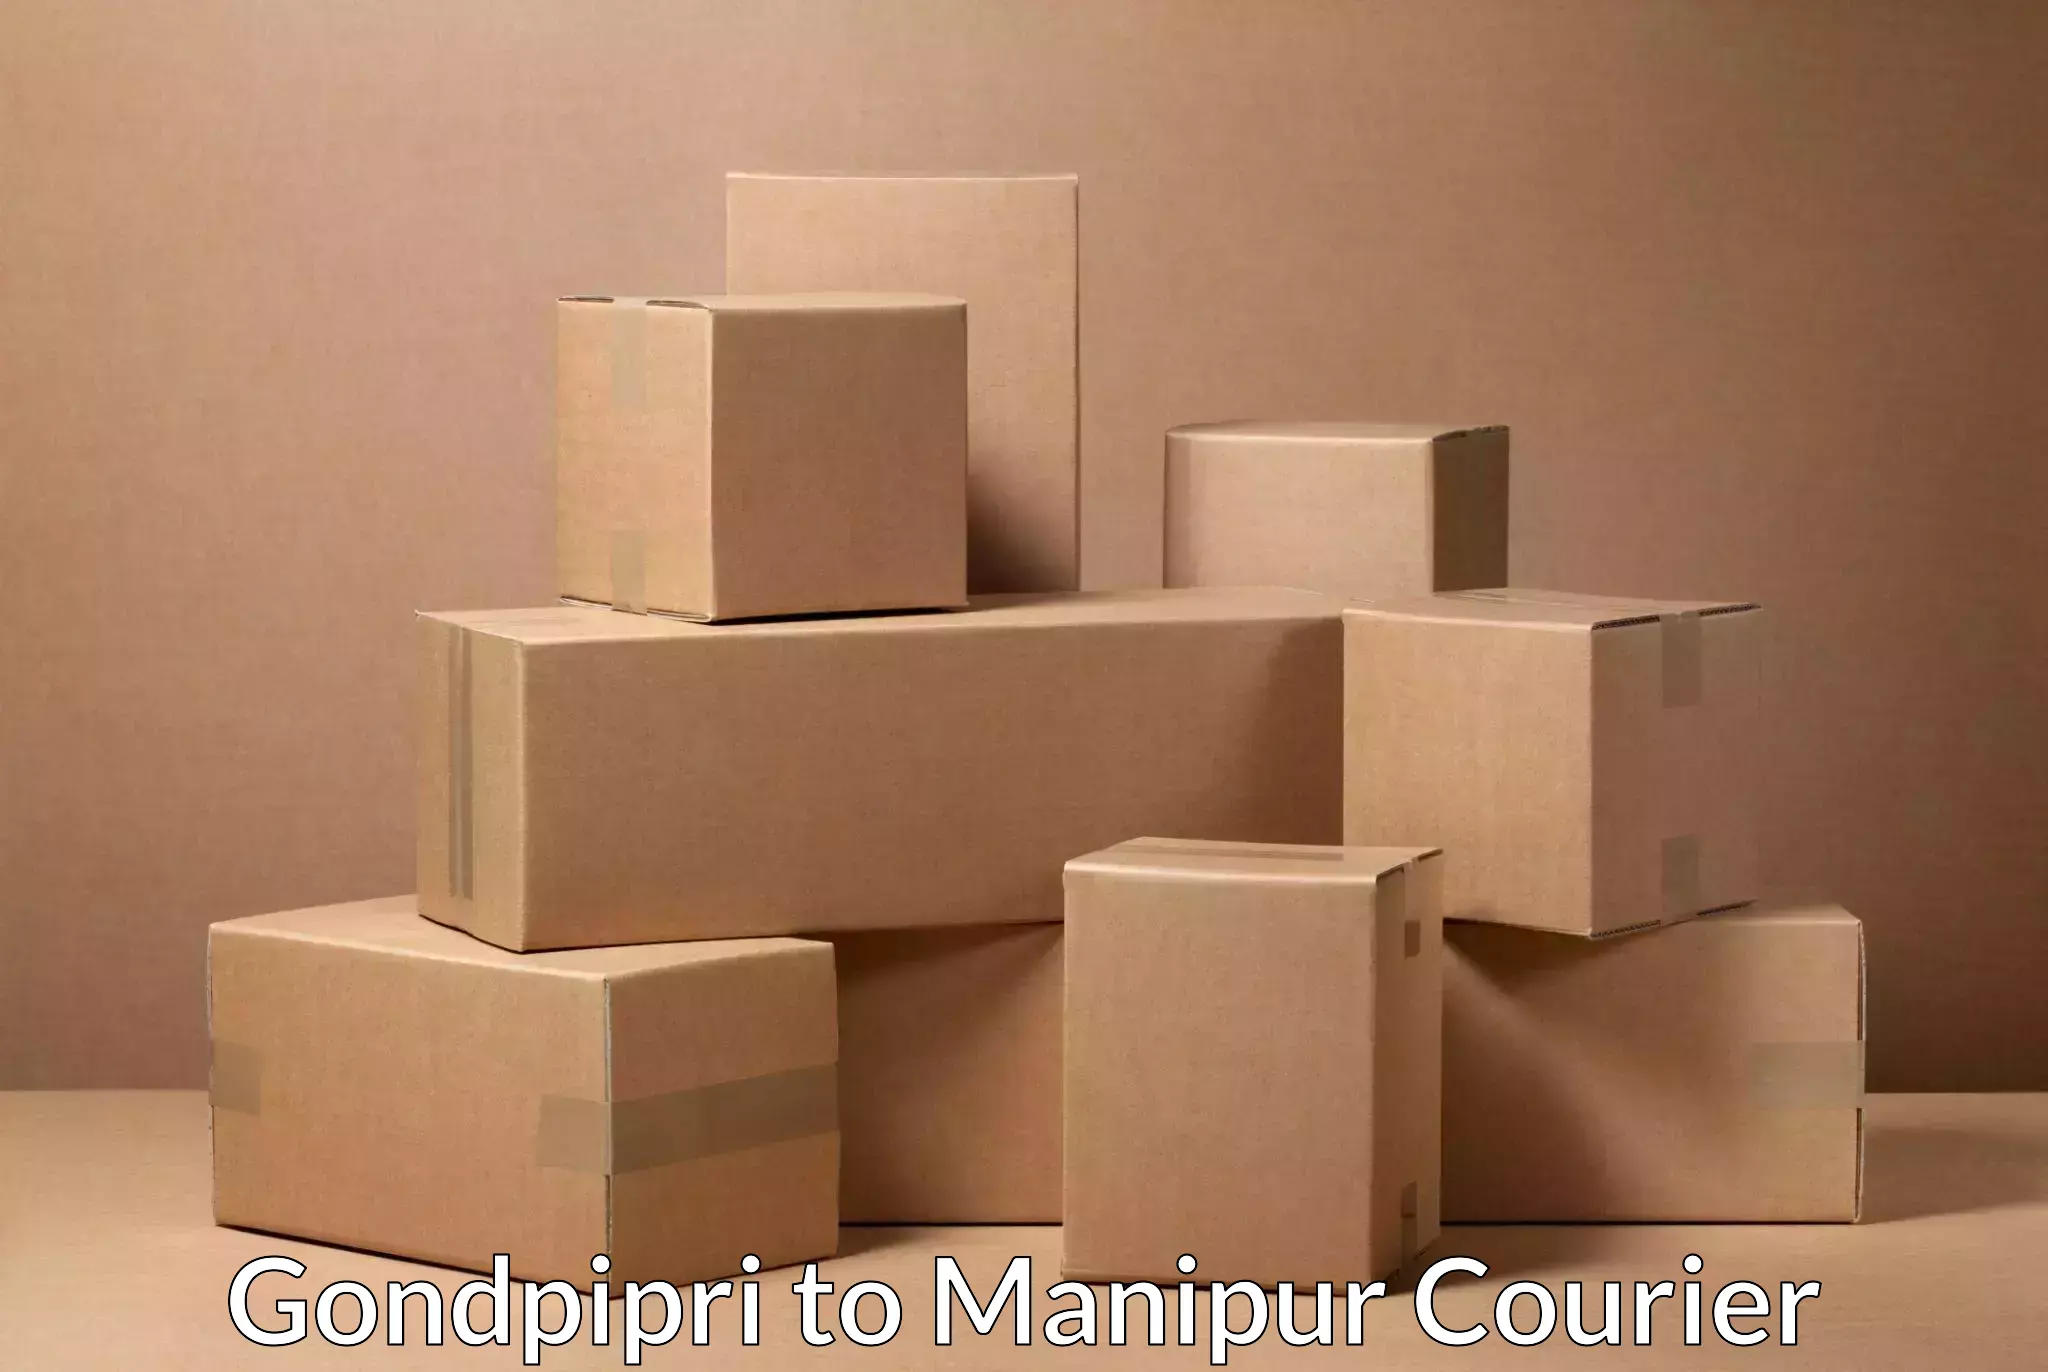 User-friendly delivery service Gondpipri to Manipur